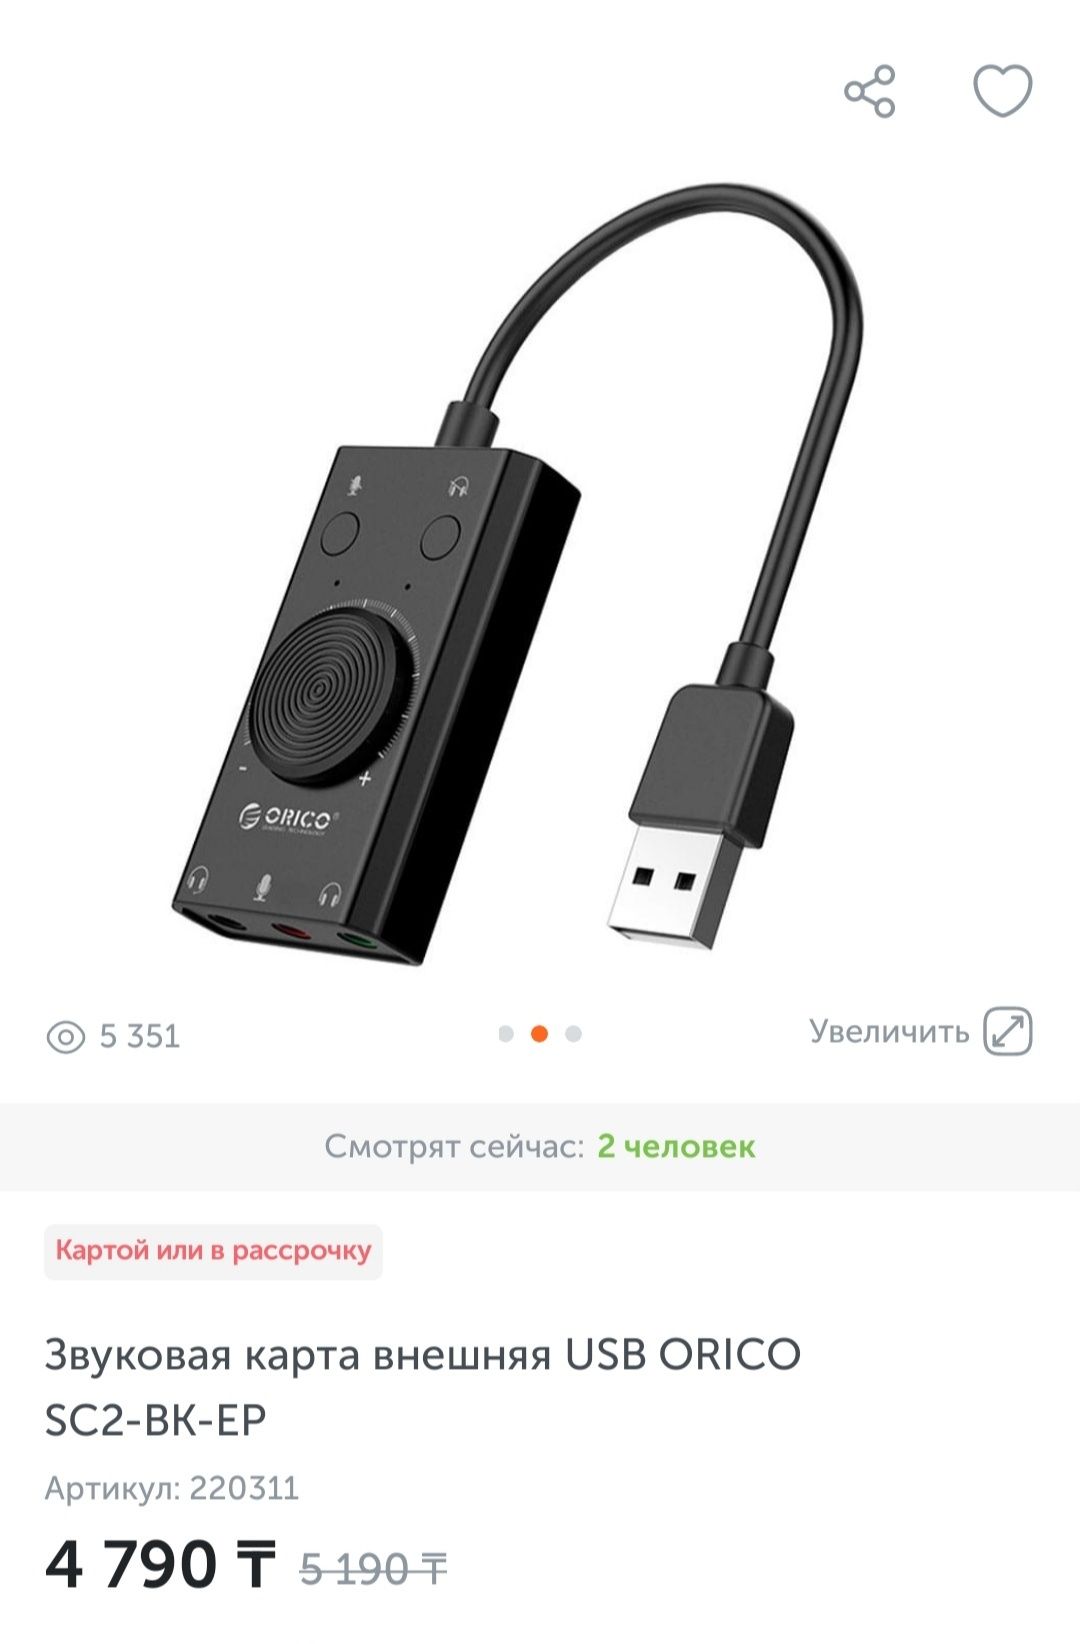 Внешняя звуковая карта , USB ORICO SC2 - BK - EP